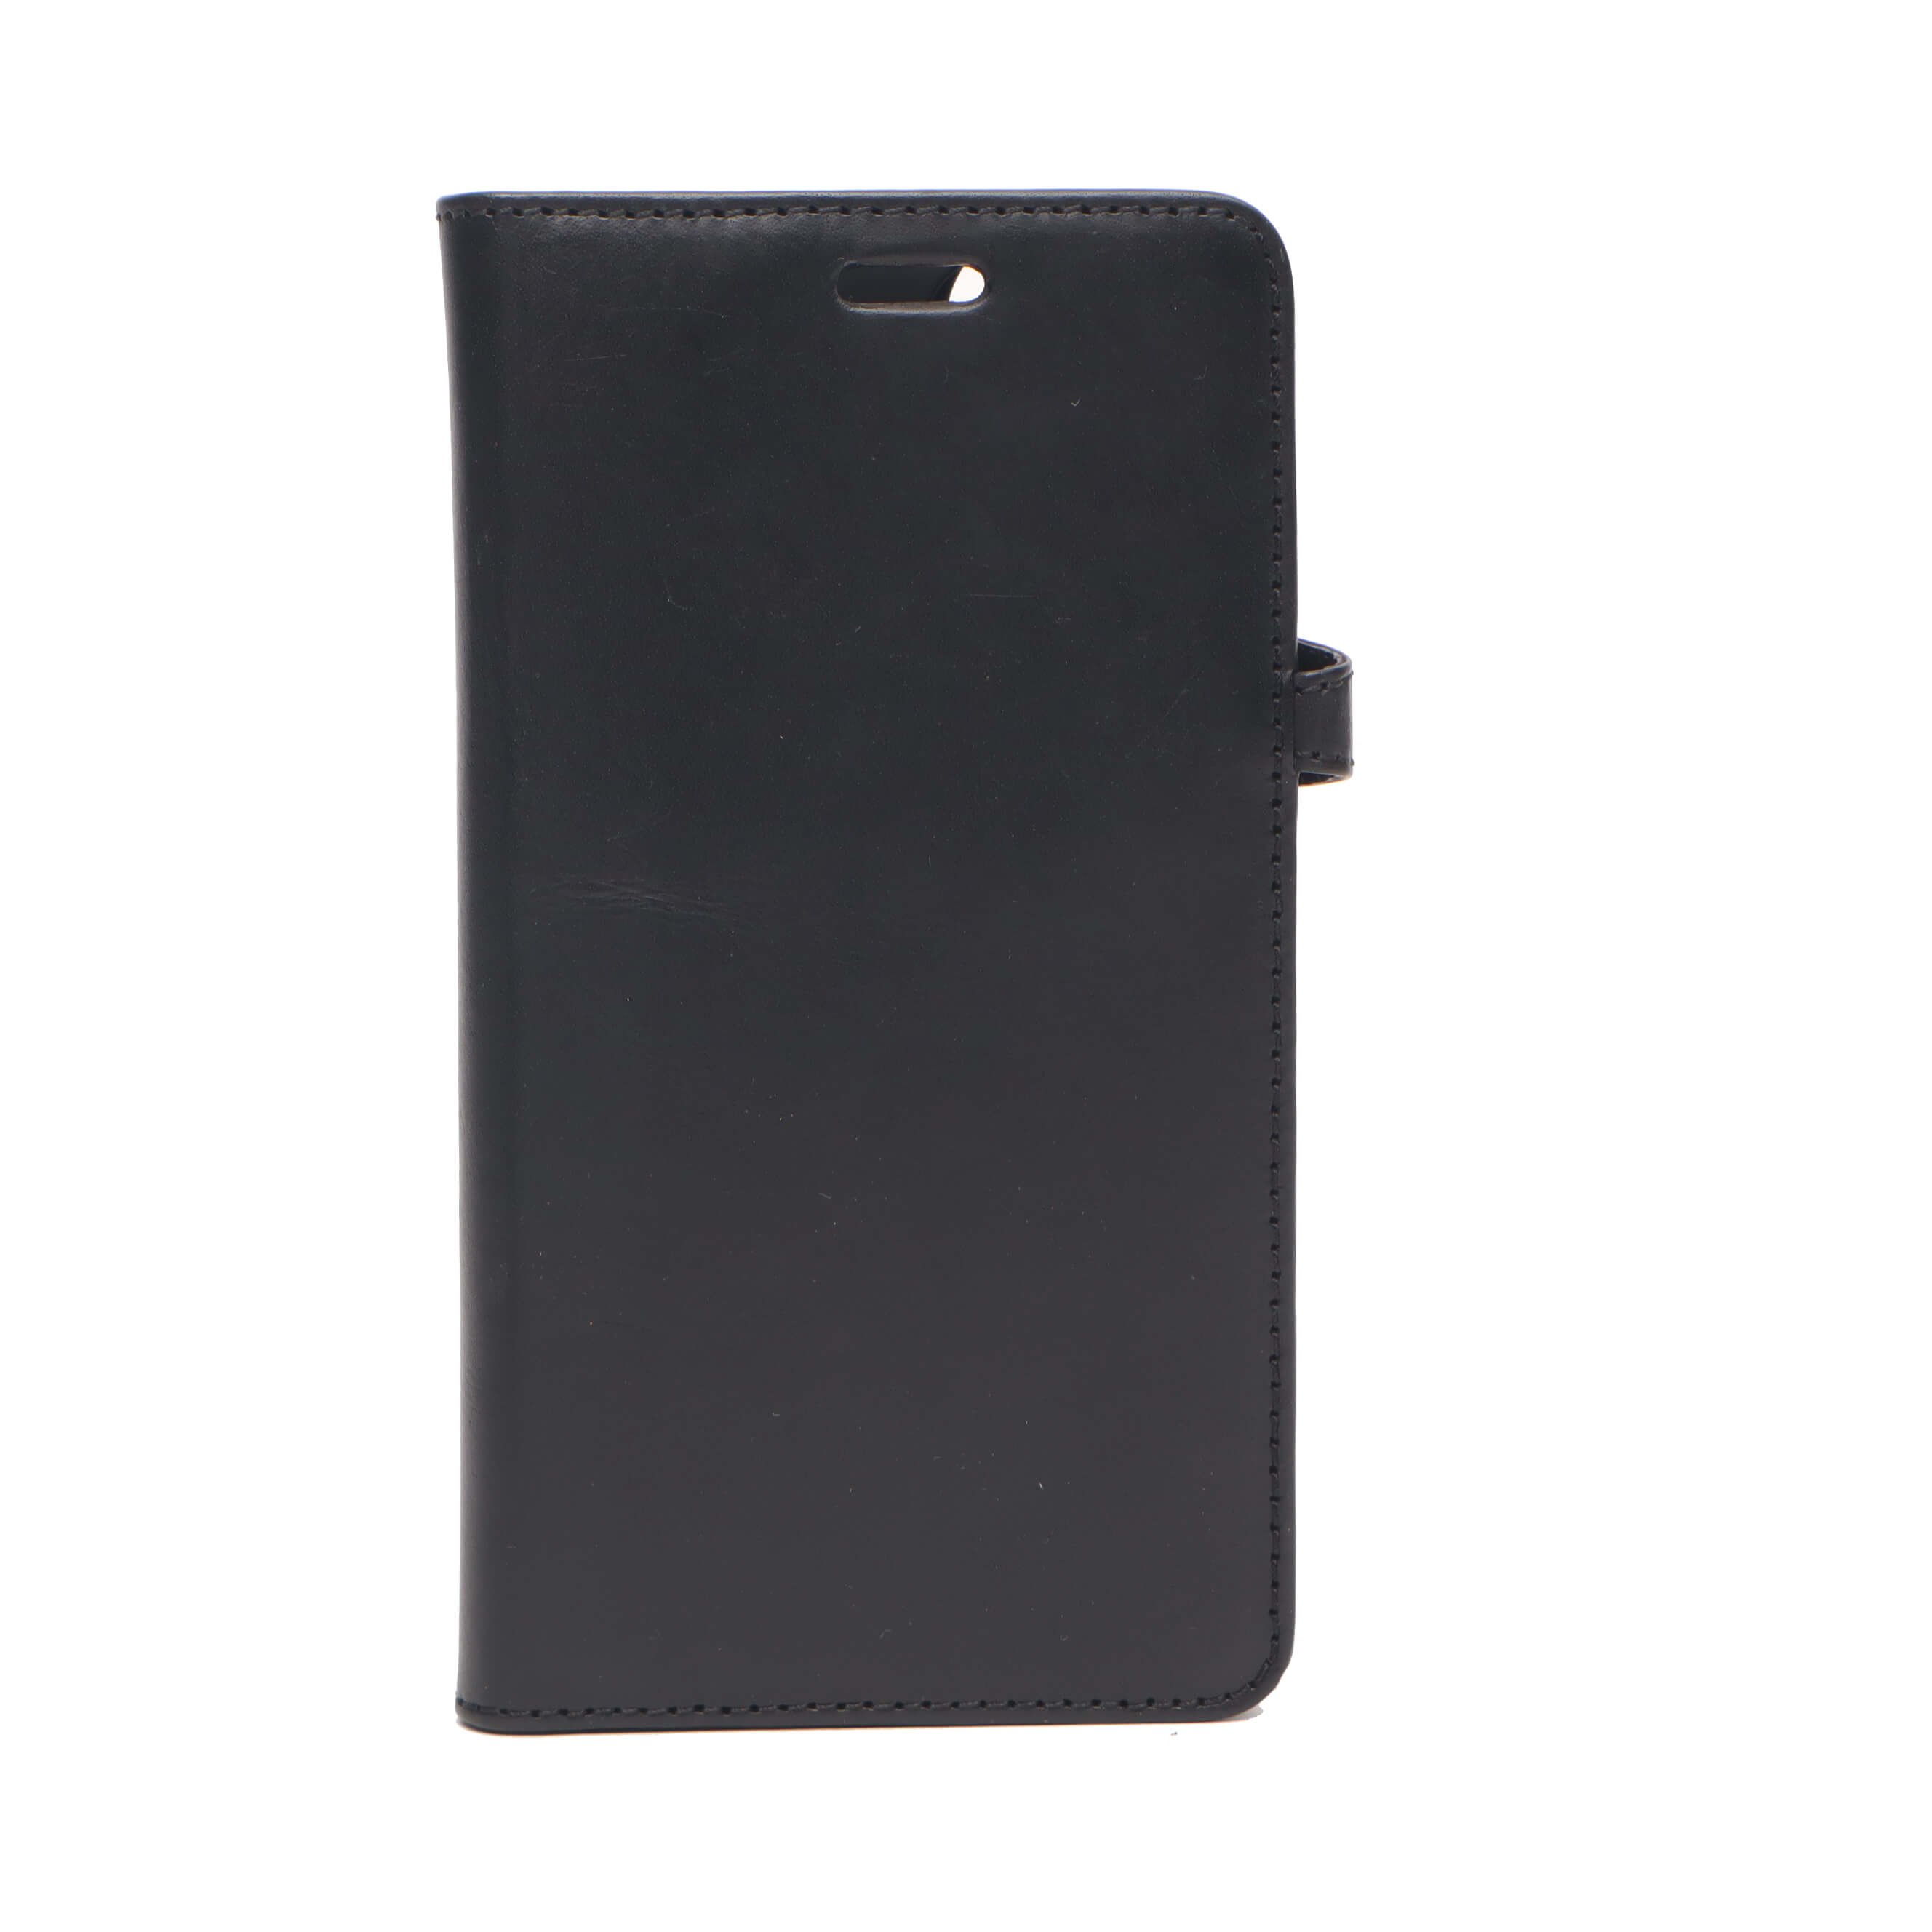 Wallet Case Black - iPhone 11 Pro Max 